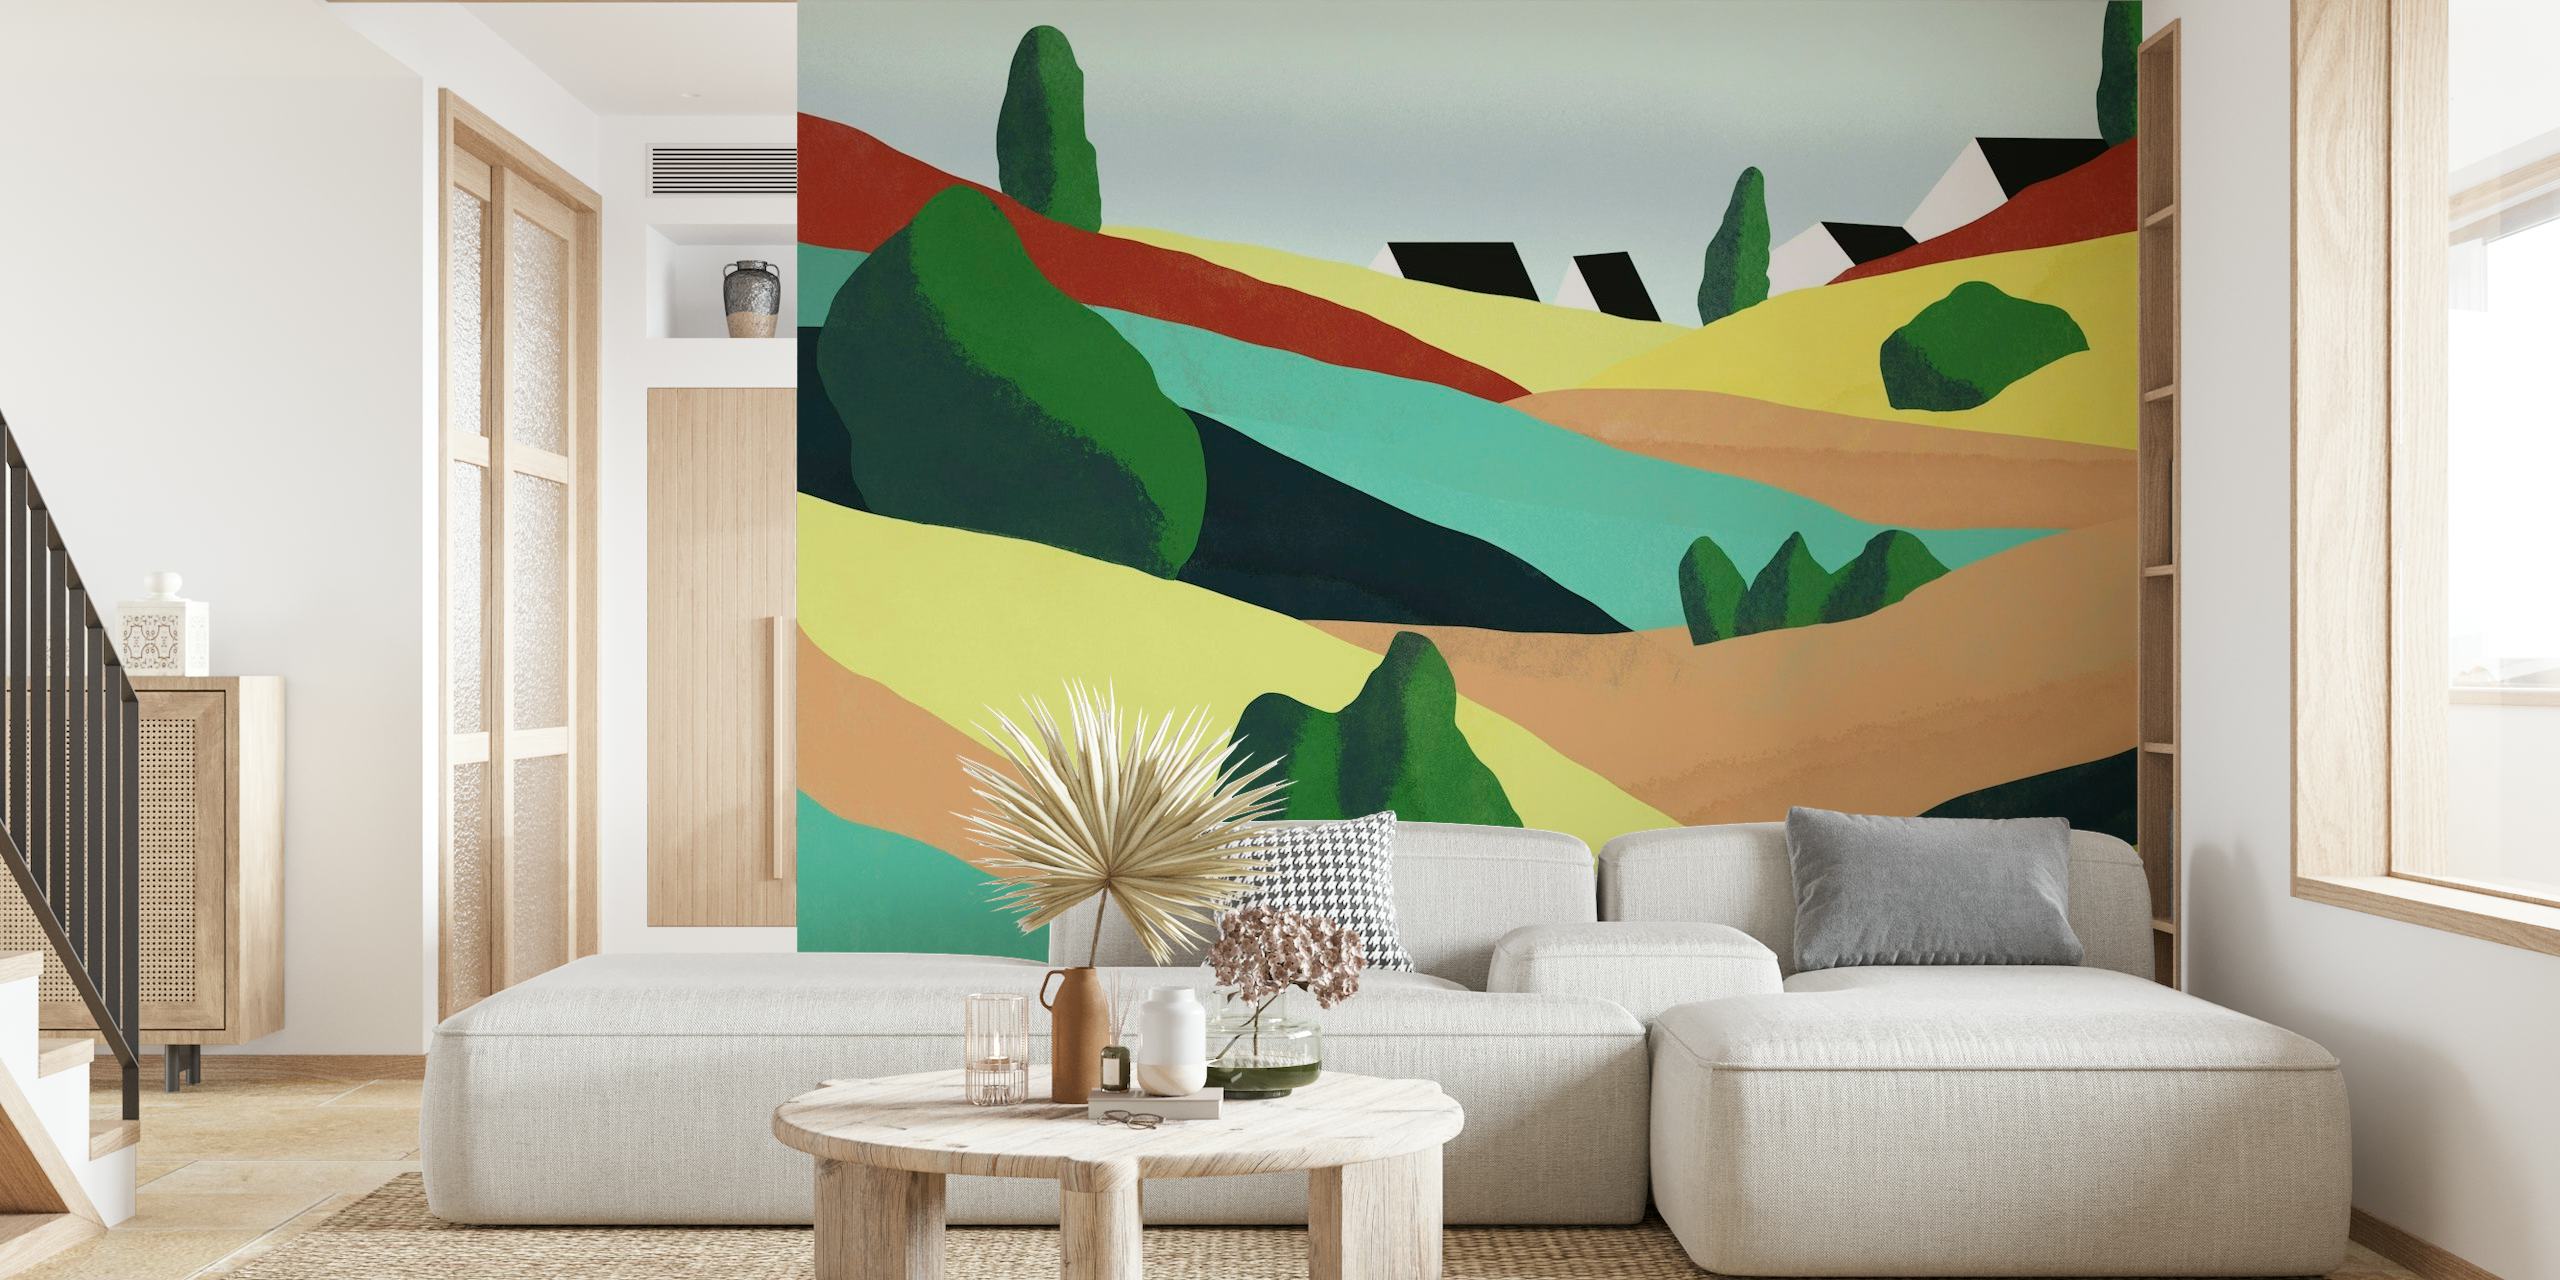 Zidni mural apstraktni brežuljci sa šarenim krajolikom nalik na crtani film